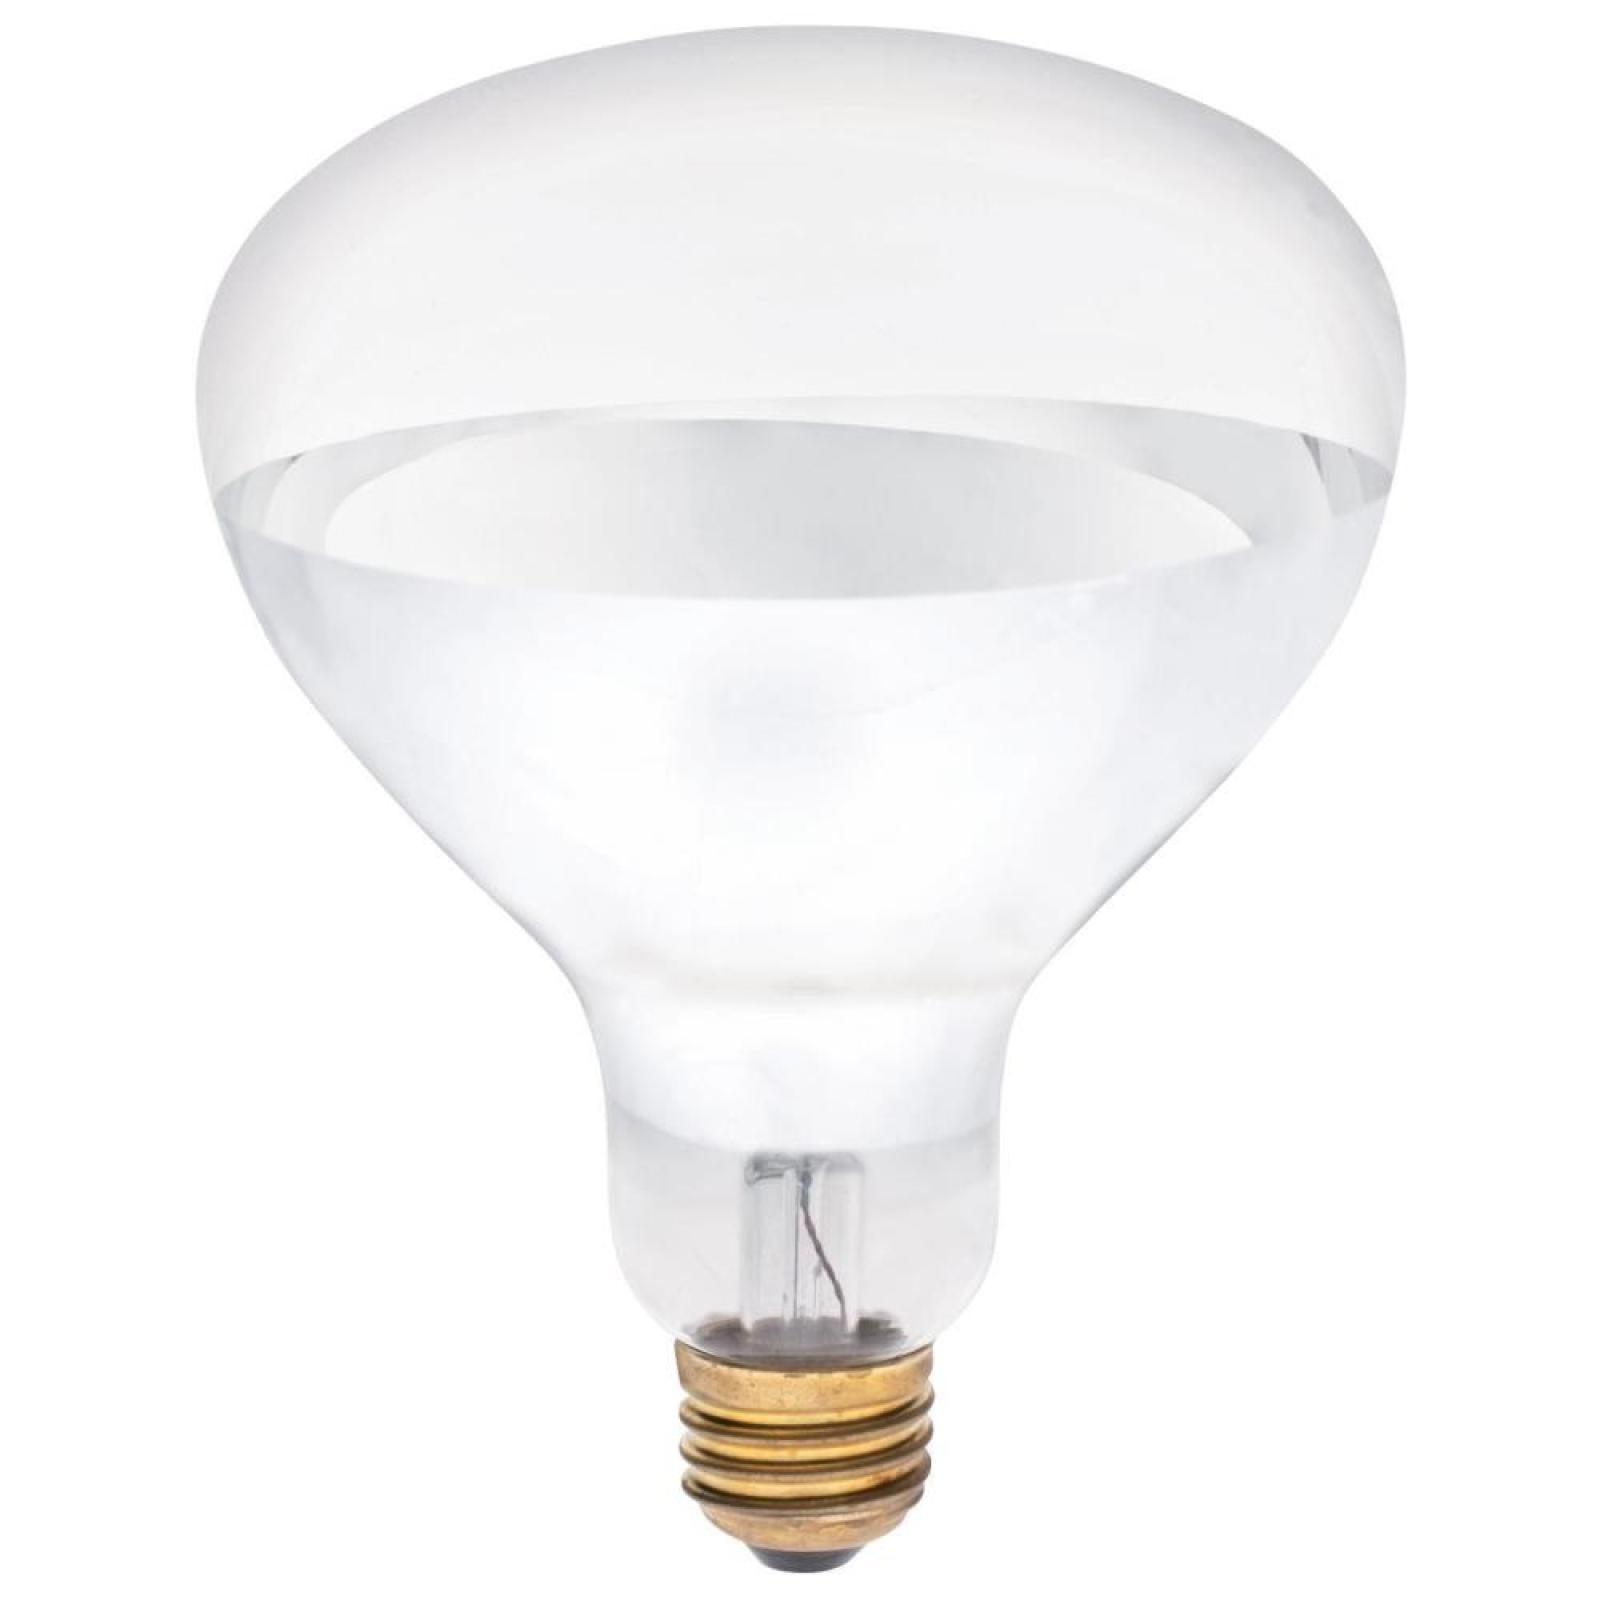 Westinghouse 250 Watt Clear Incandescent Reflector Light Bulb